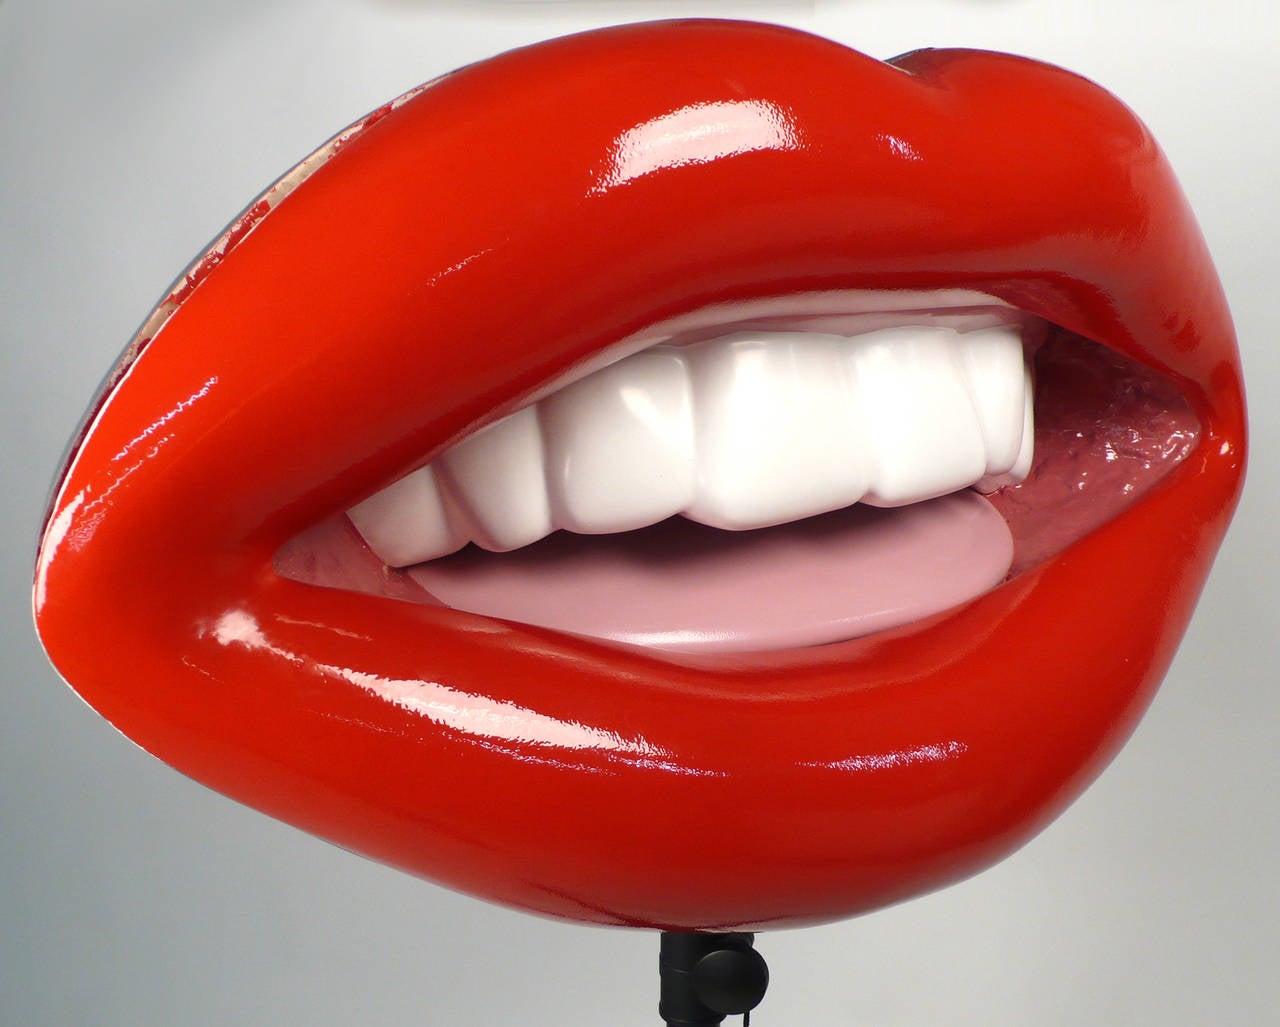 lip sculpture